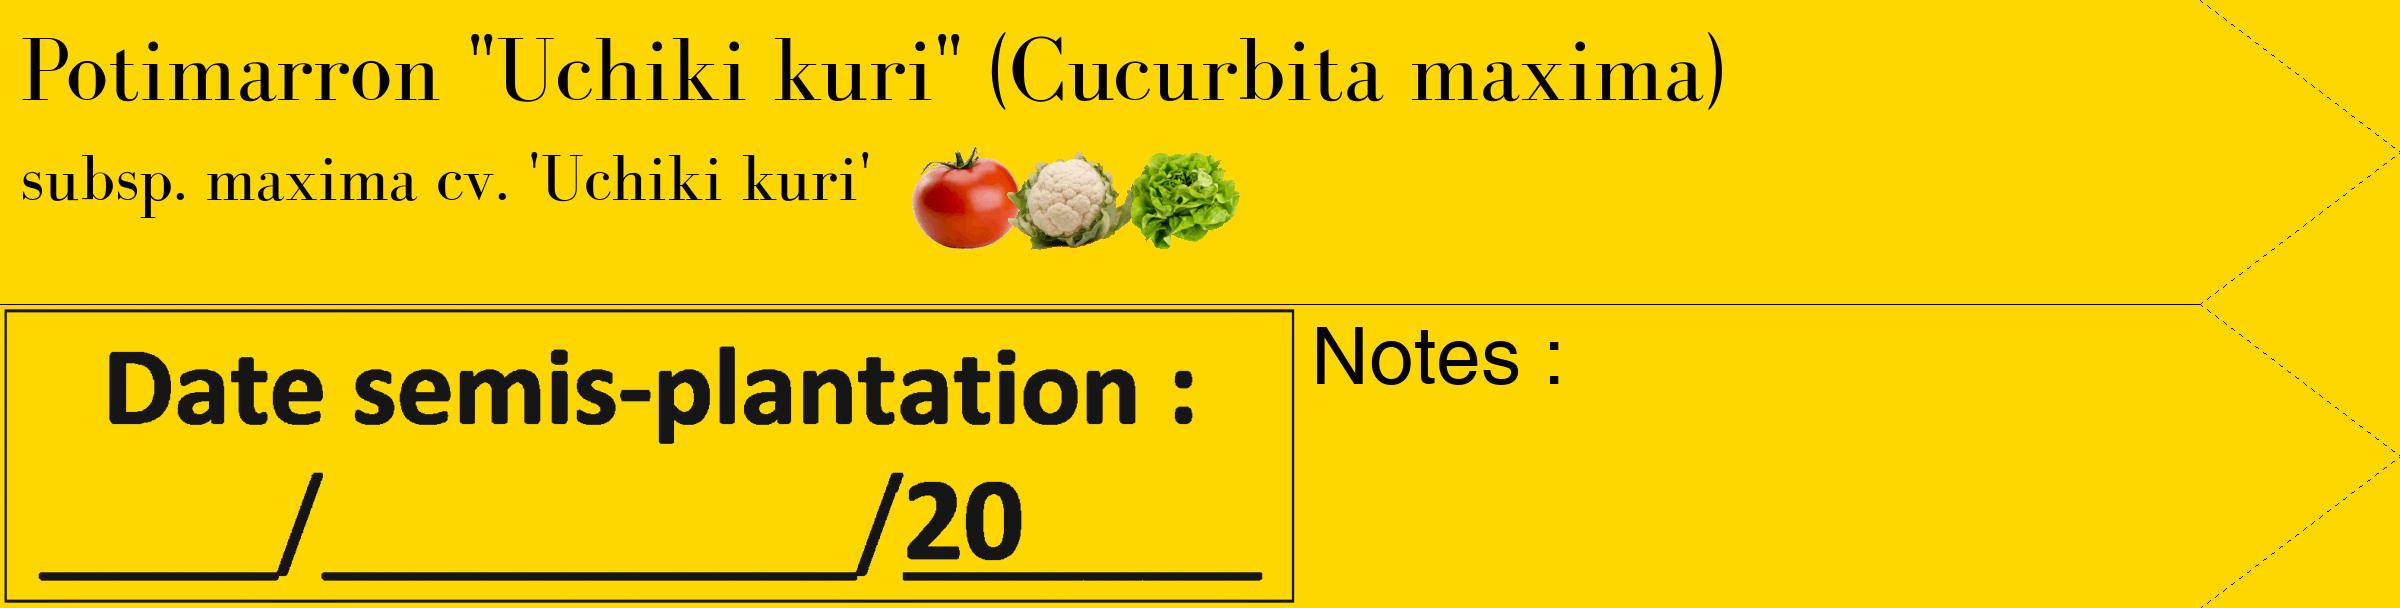 Étiquette de : Cucurbita maxima subsp. maxima cv. 'Uchiki kuri' - format c - style noire21simple_simple_simplebod avec comestibilité simplifiée